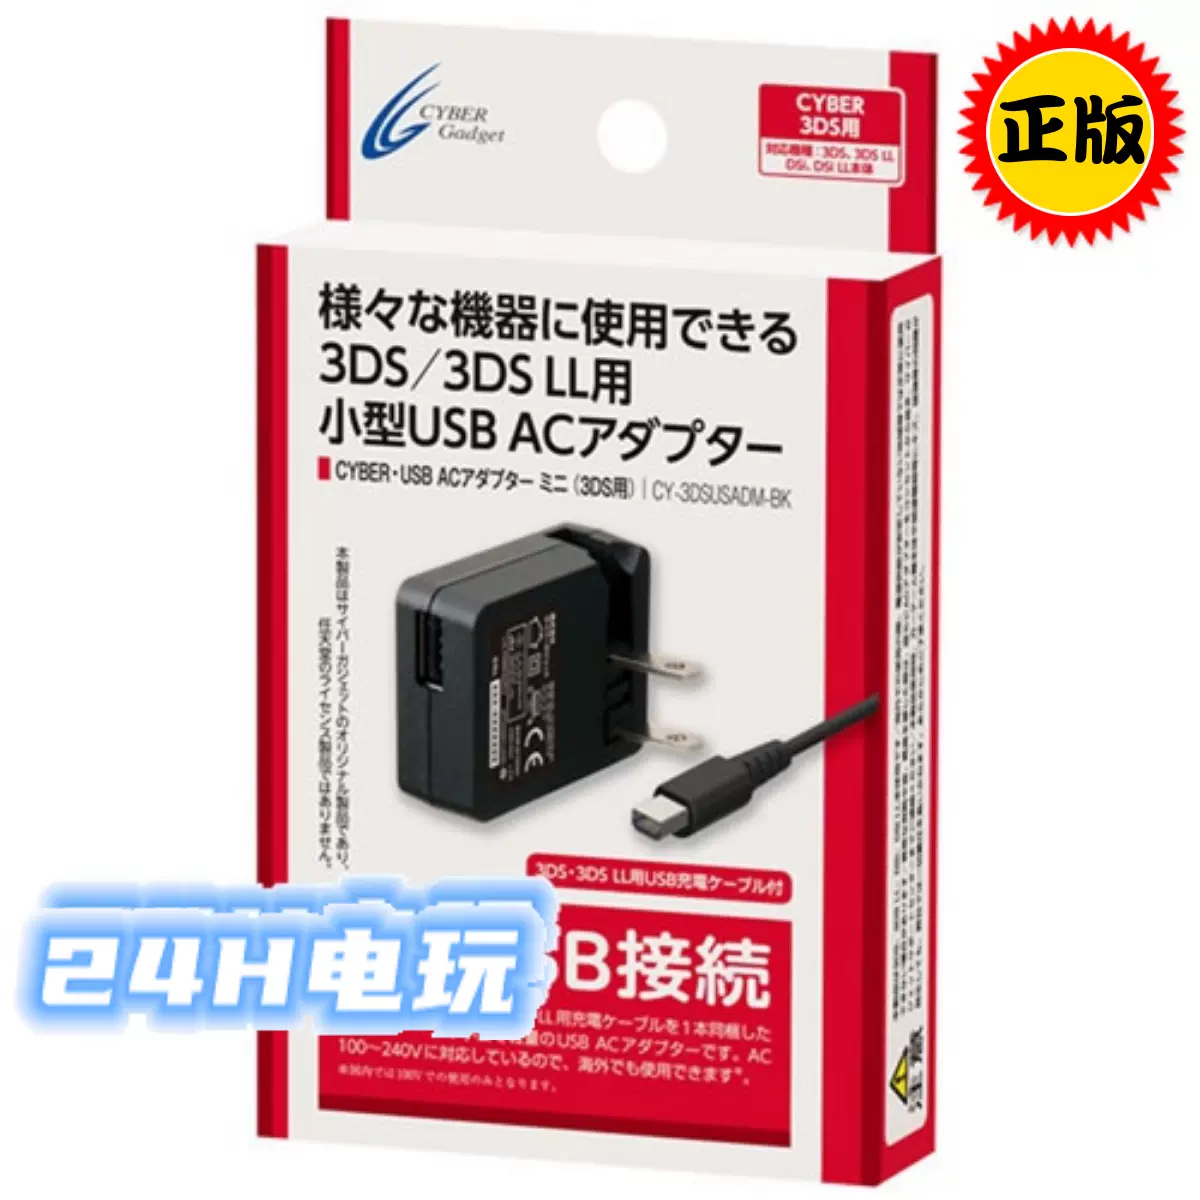 CYBER 原裝NEW 3DSLL 3DS配件充電器AC 電源火牛現貨-Taobao